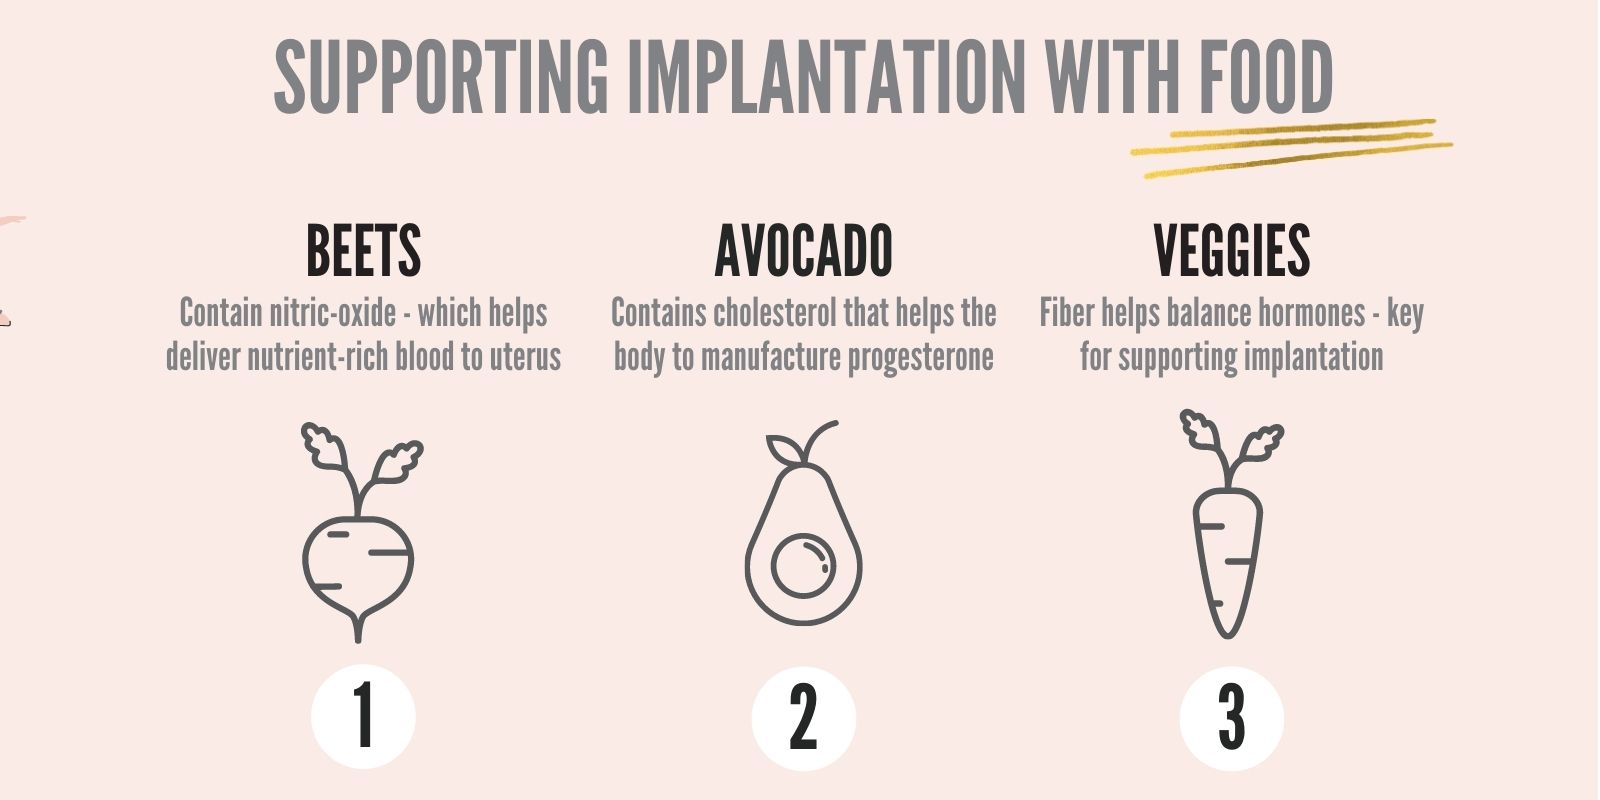 Foods for implantation